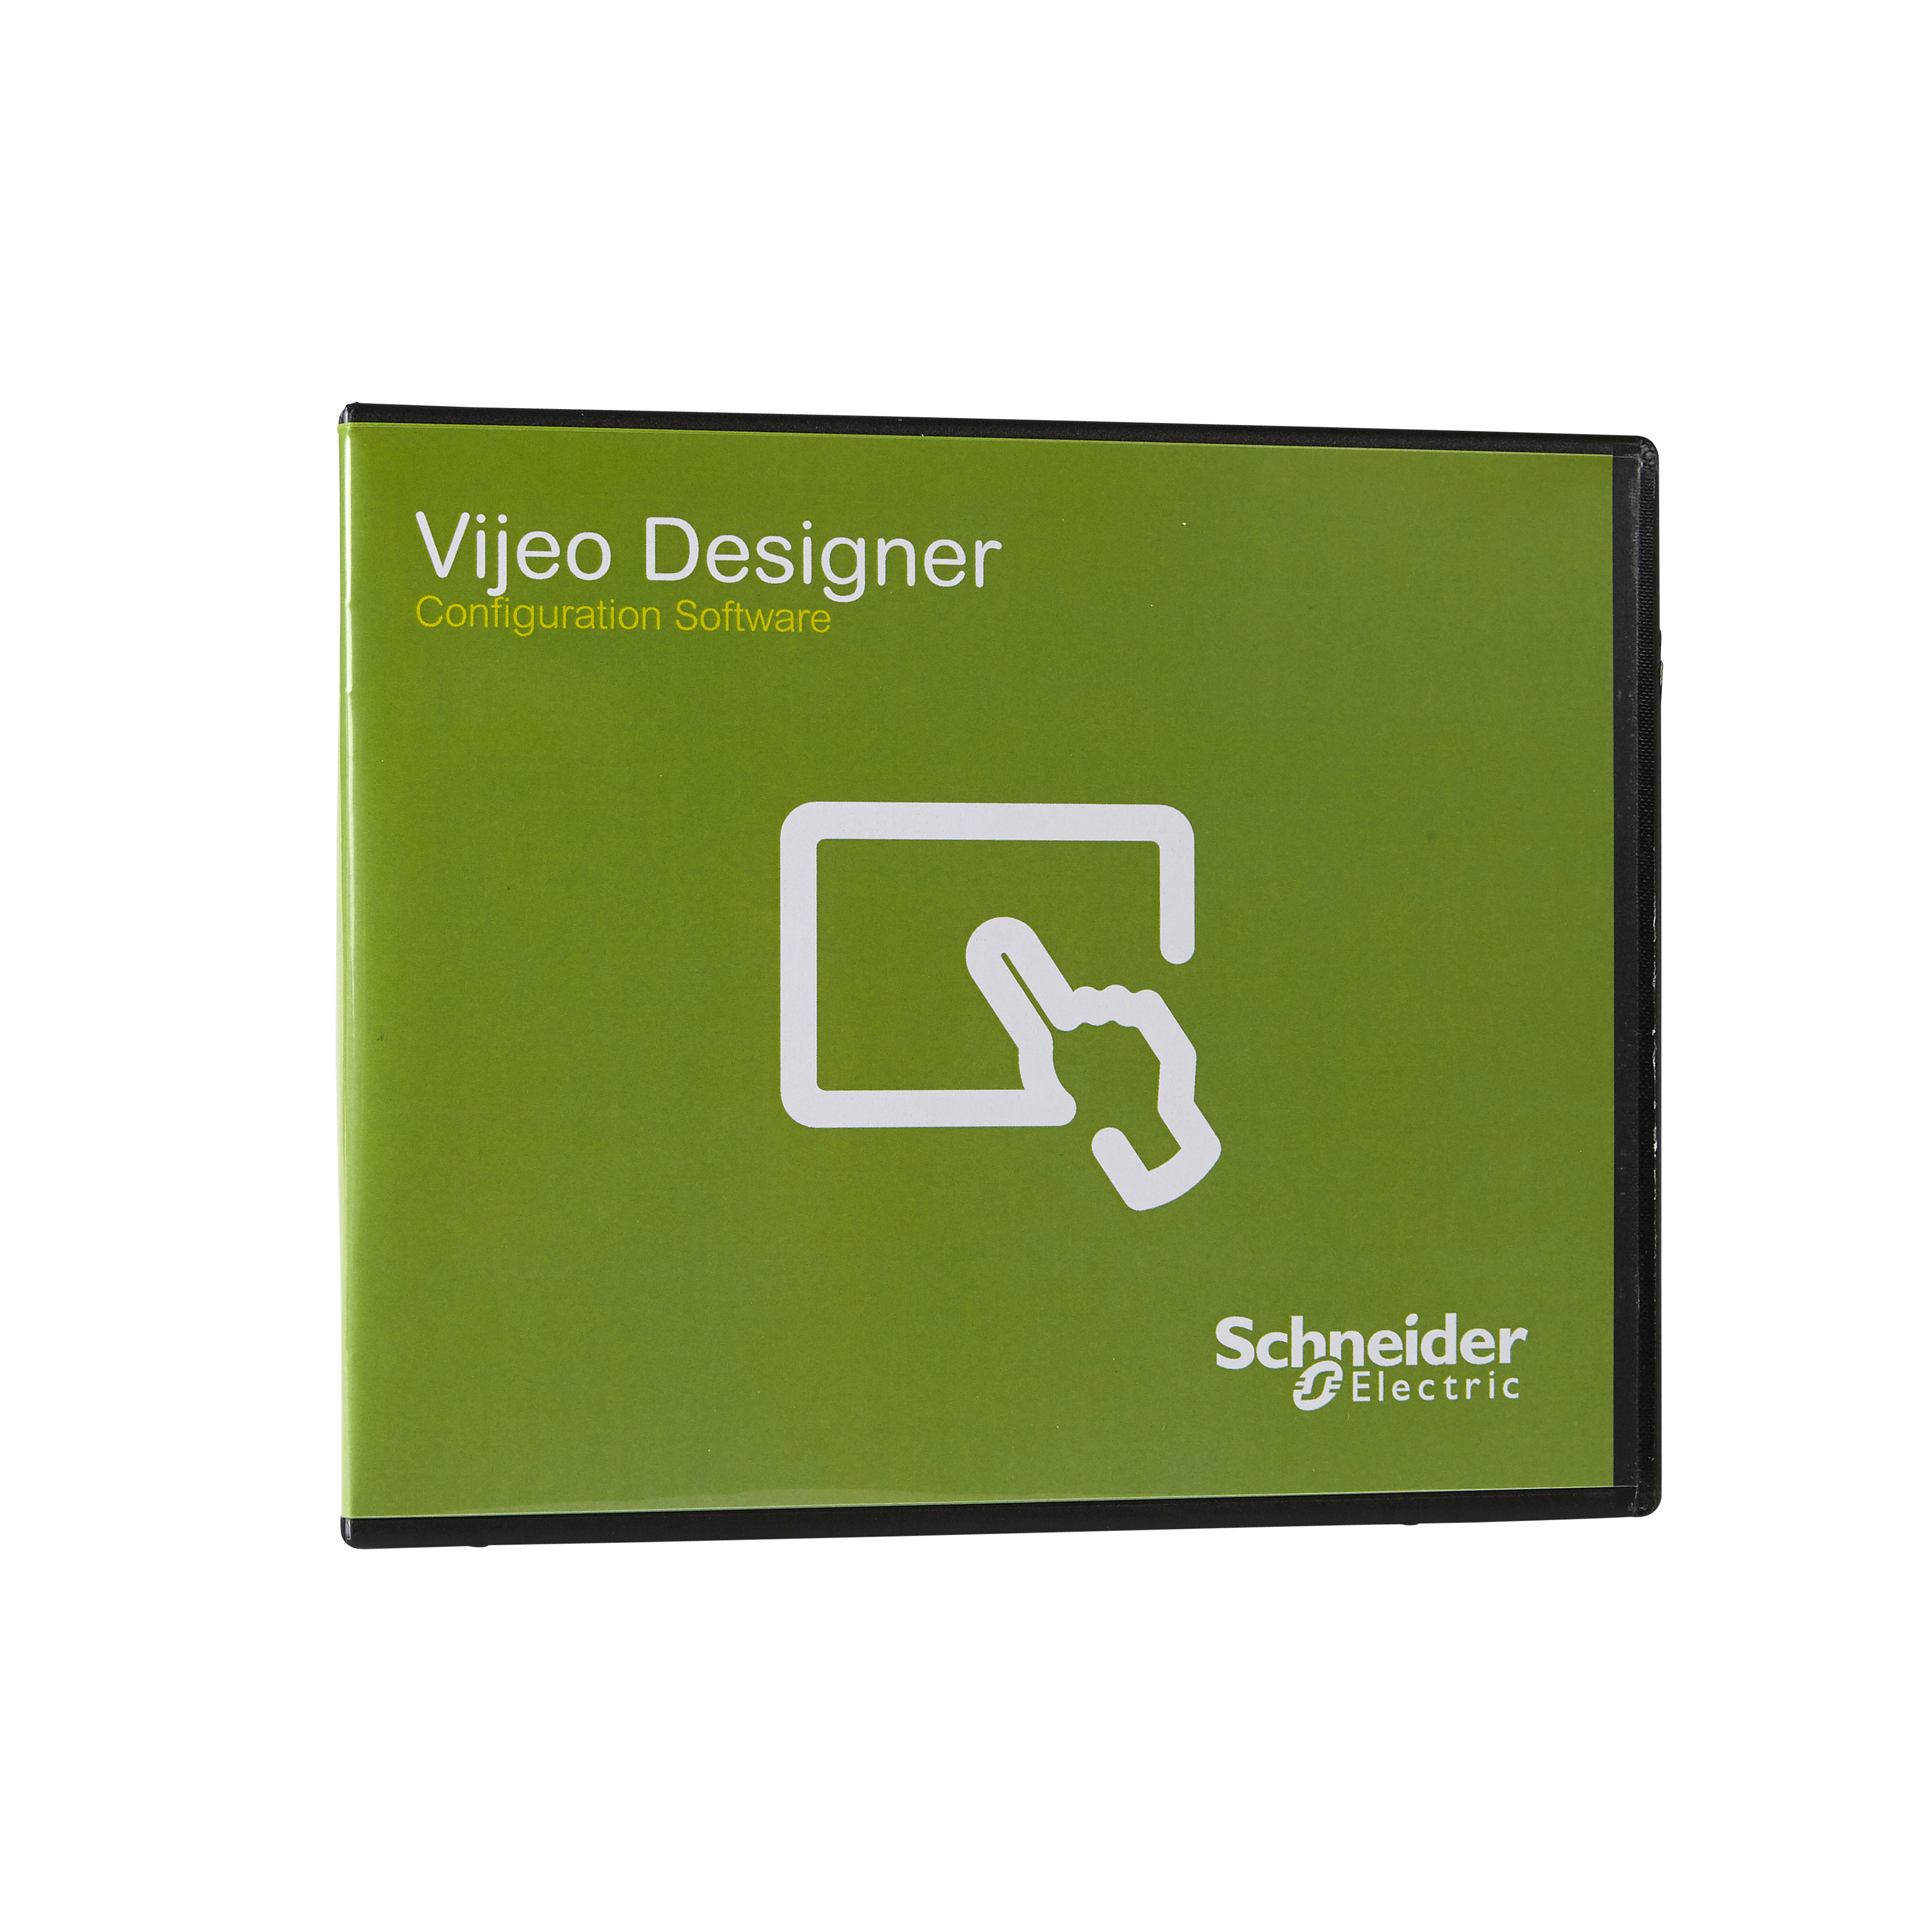 Vijeo Designer 6.2, HMI configuration software facility license